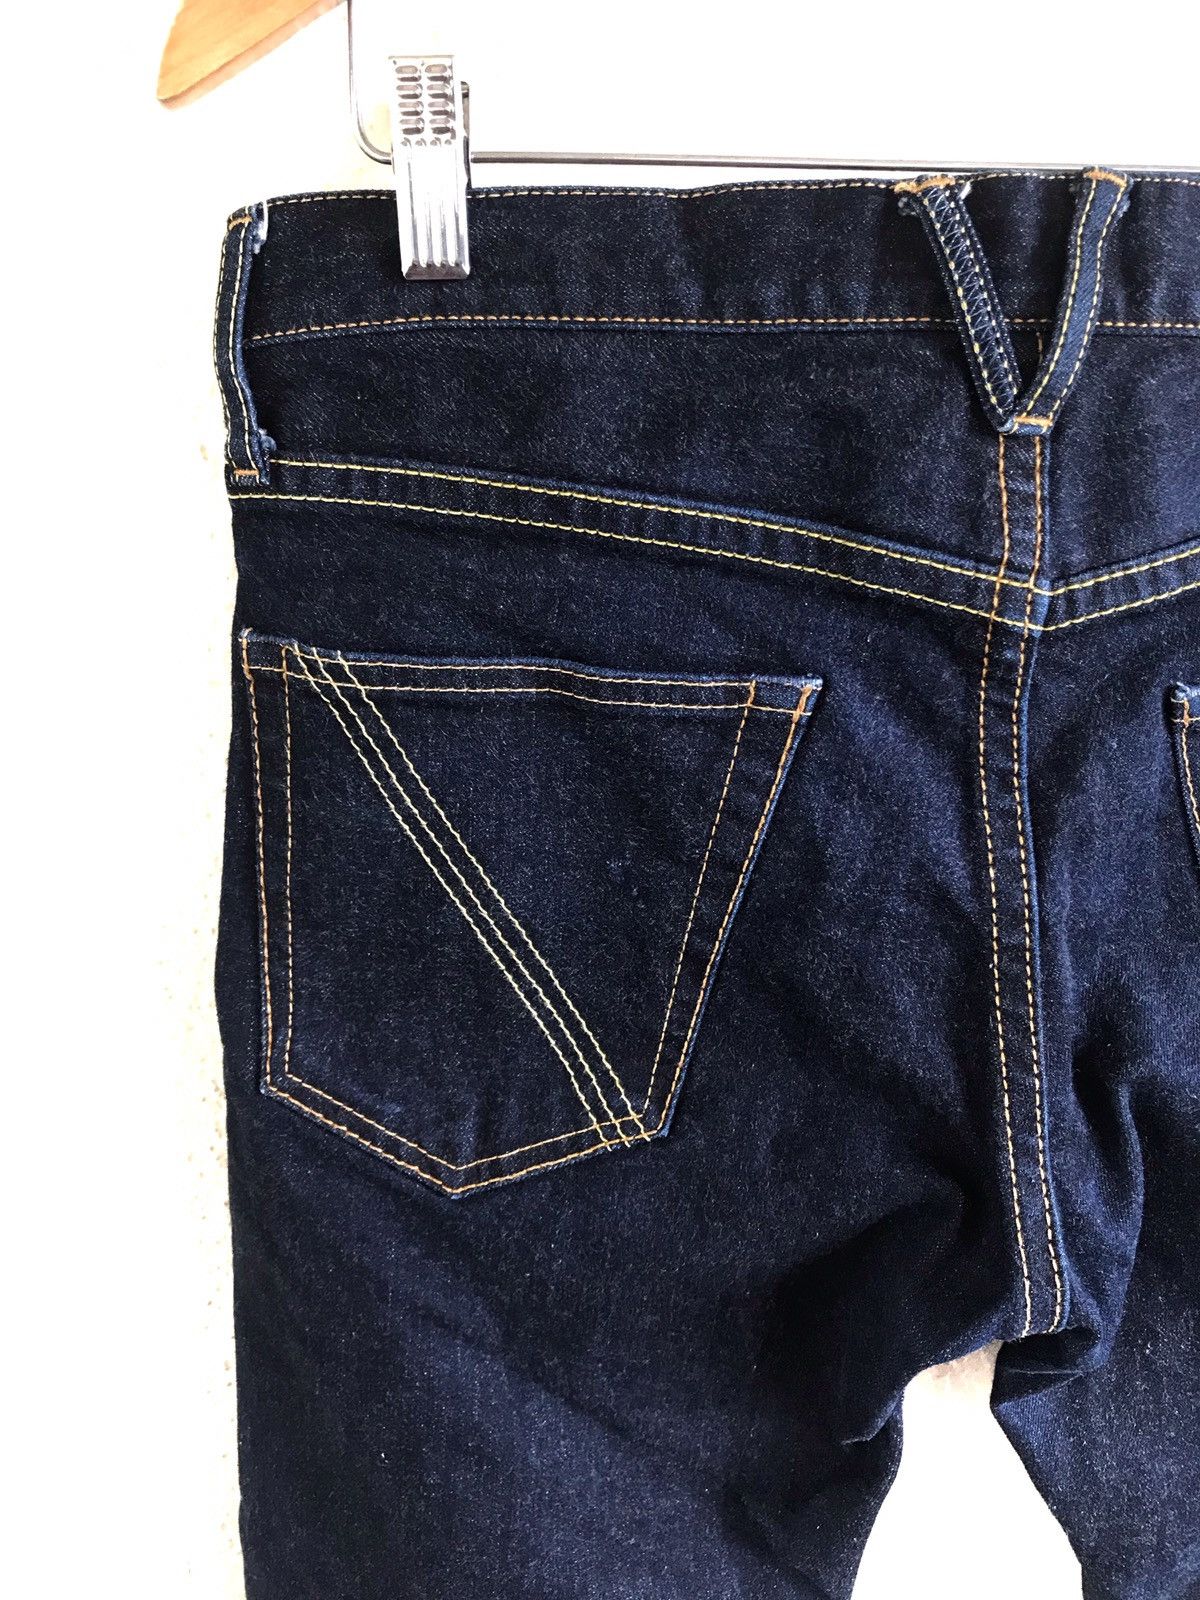 VANQUISH Japan Selvedge Skinny Jeans - 9